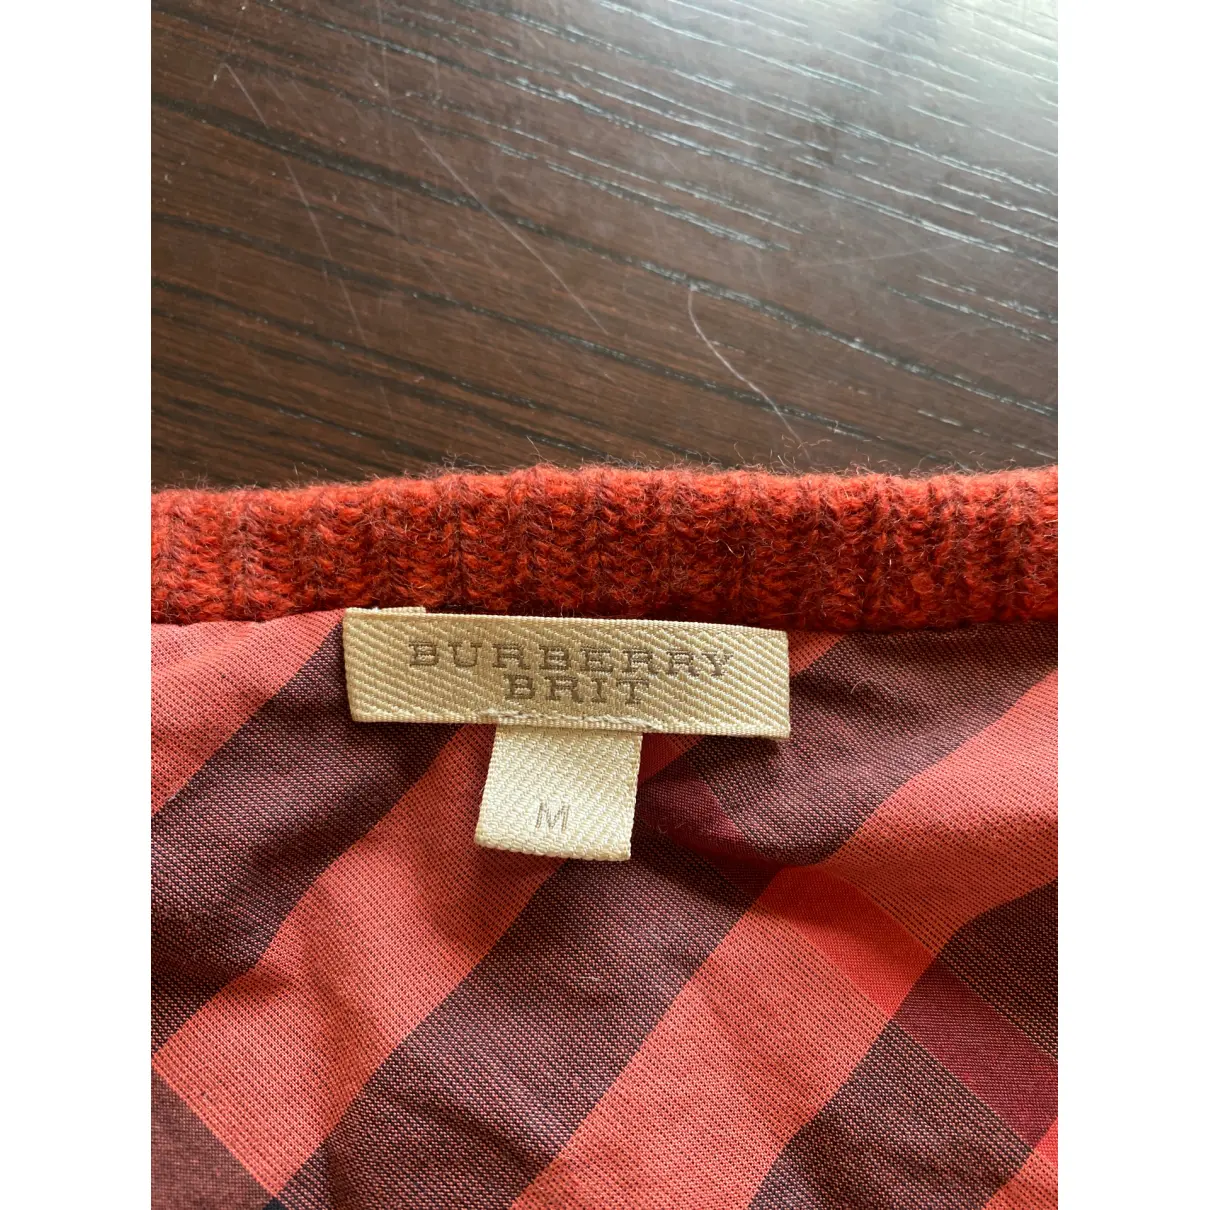 Buy Burberry Wool jumper online